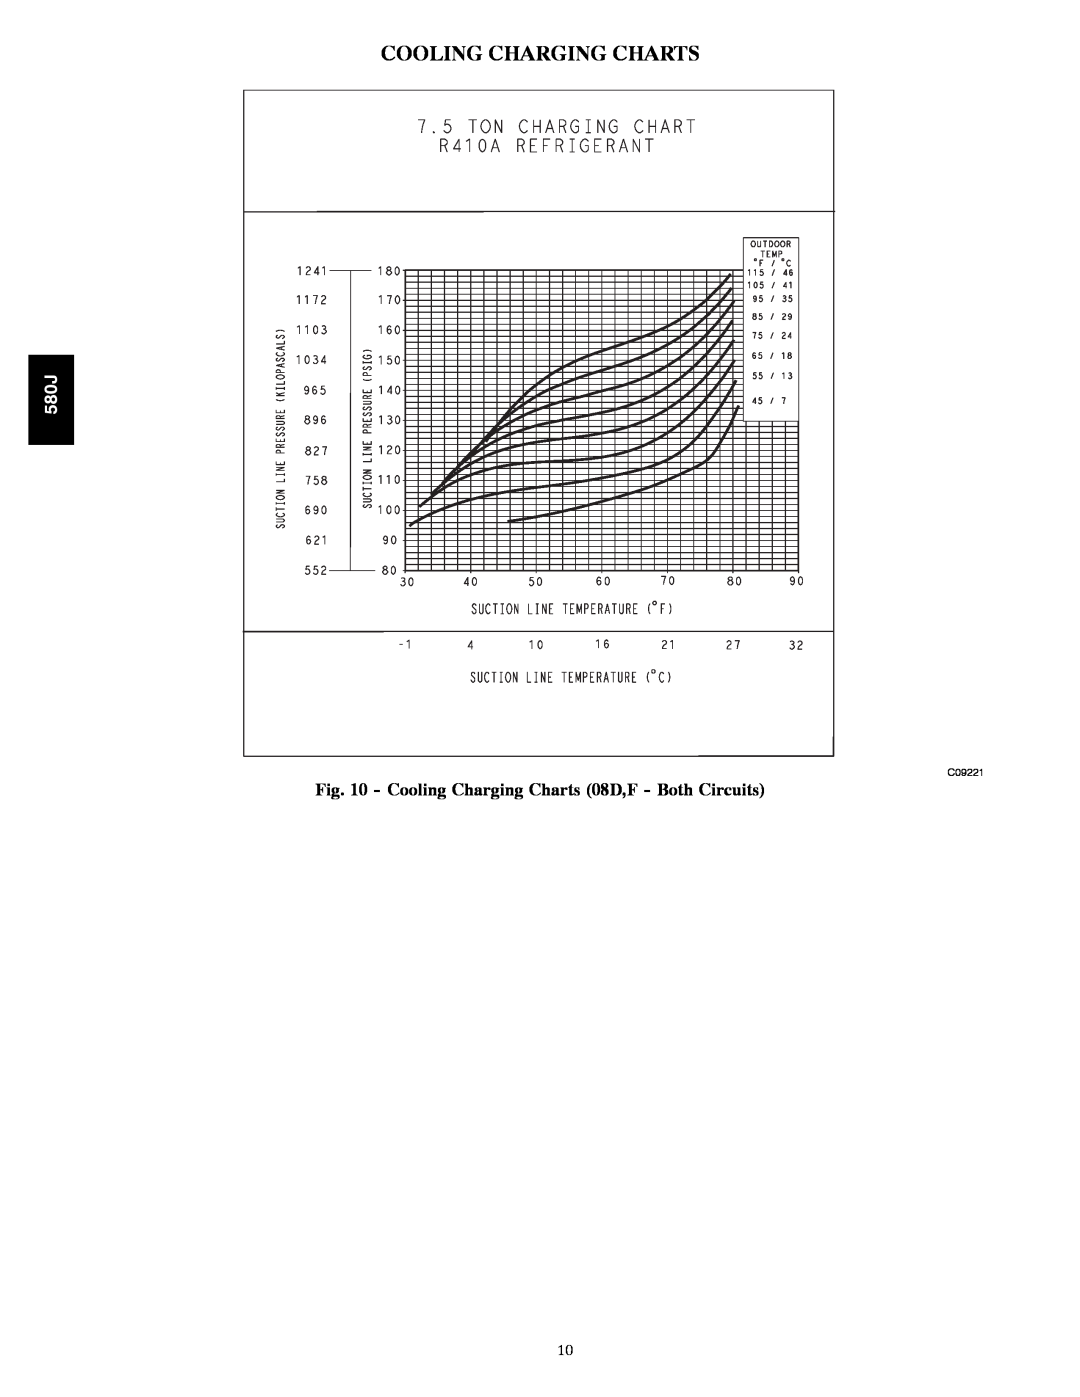 Bryant F, 580J*08--14D appendix Cooling Charging Charts, C09221 